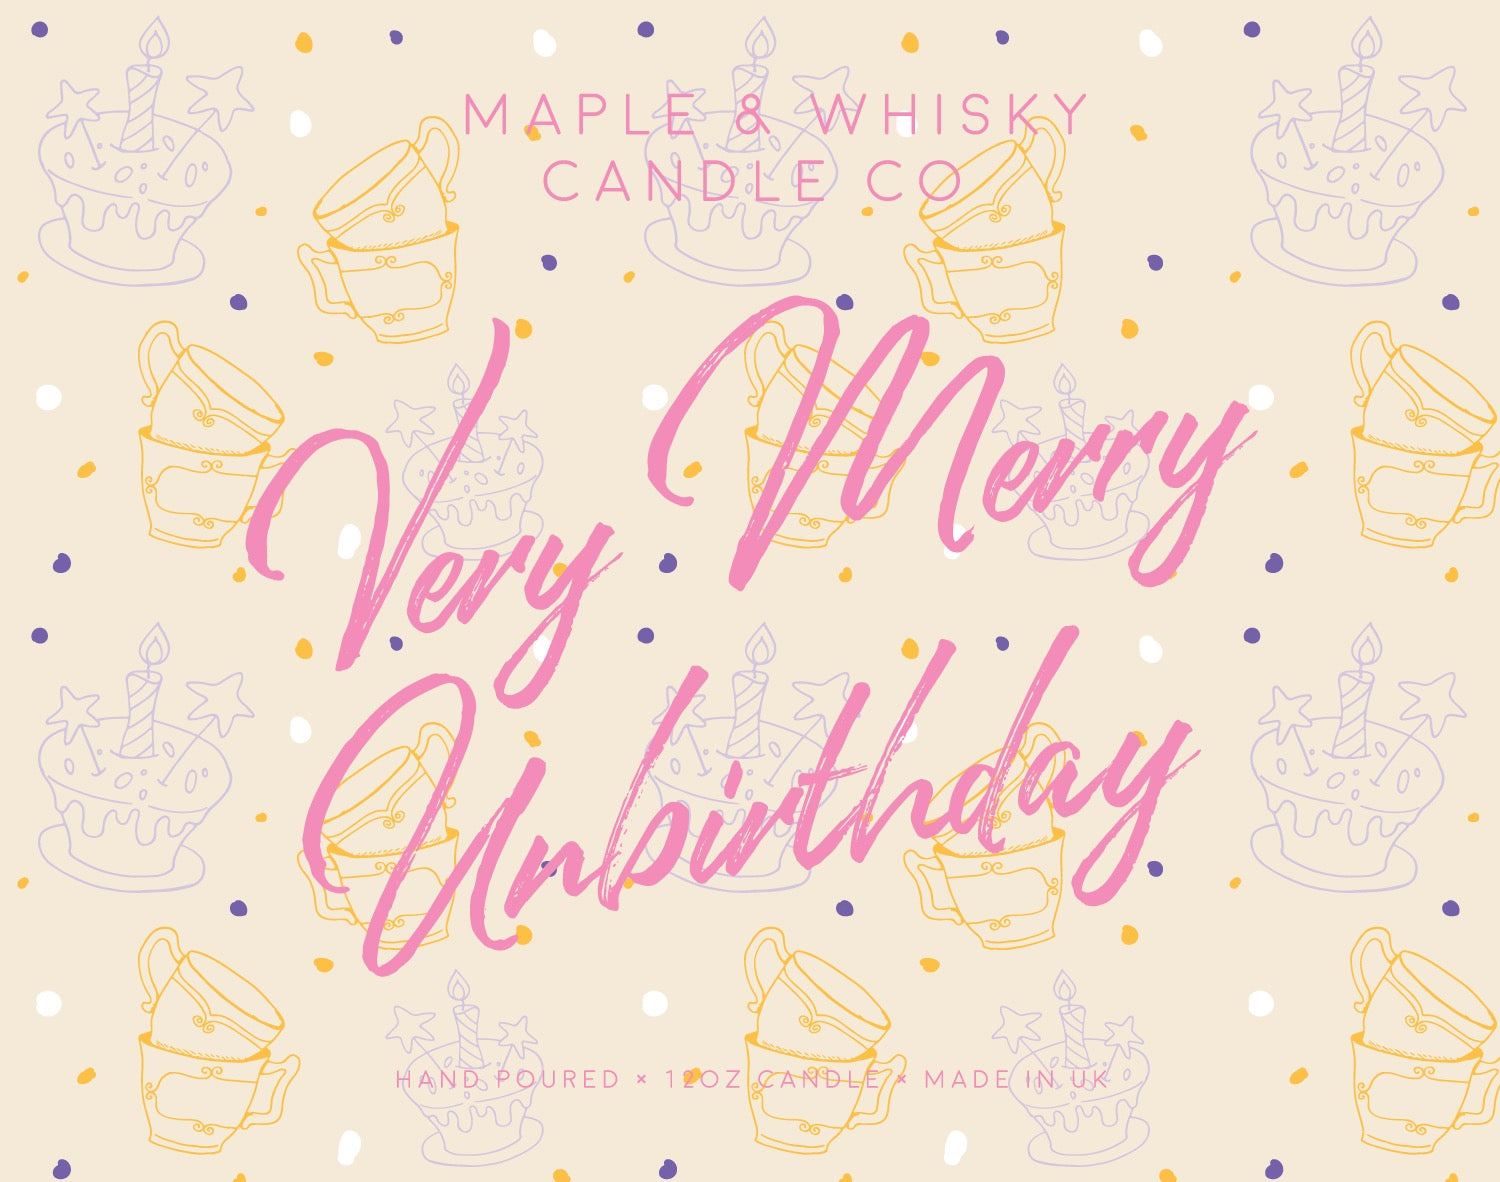 Very Merry Unbirthday - Jar Candle